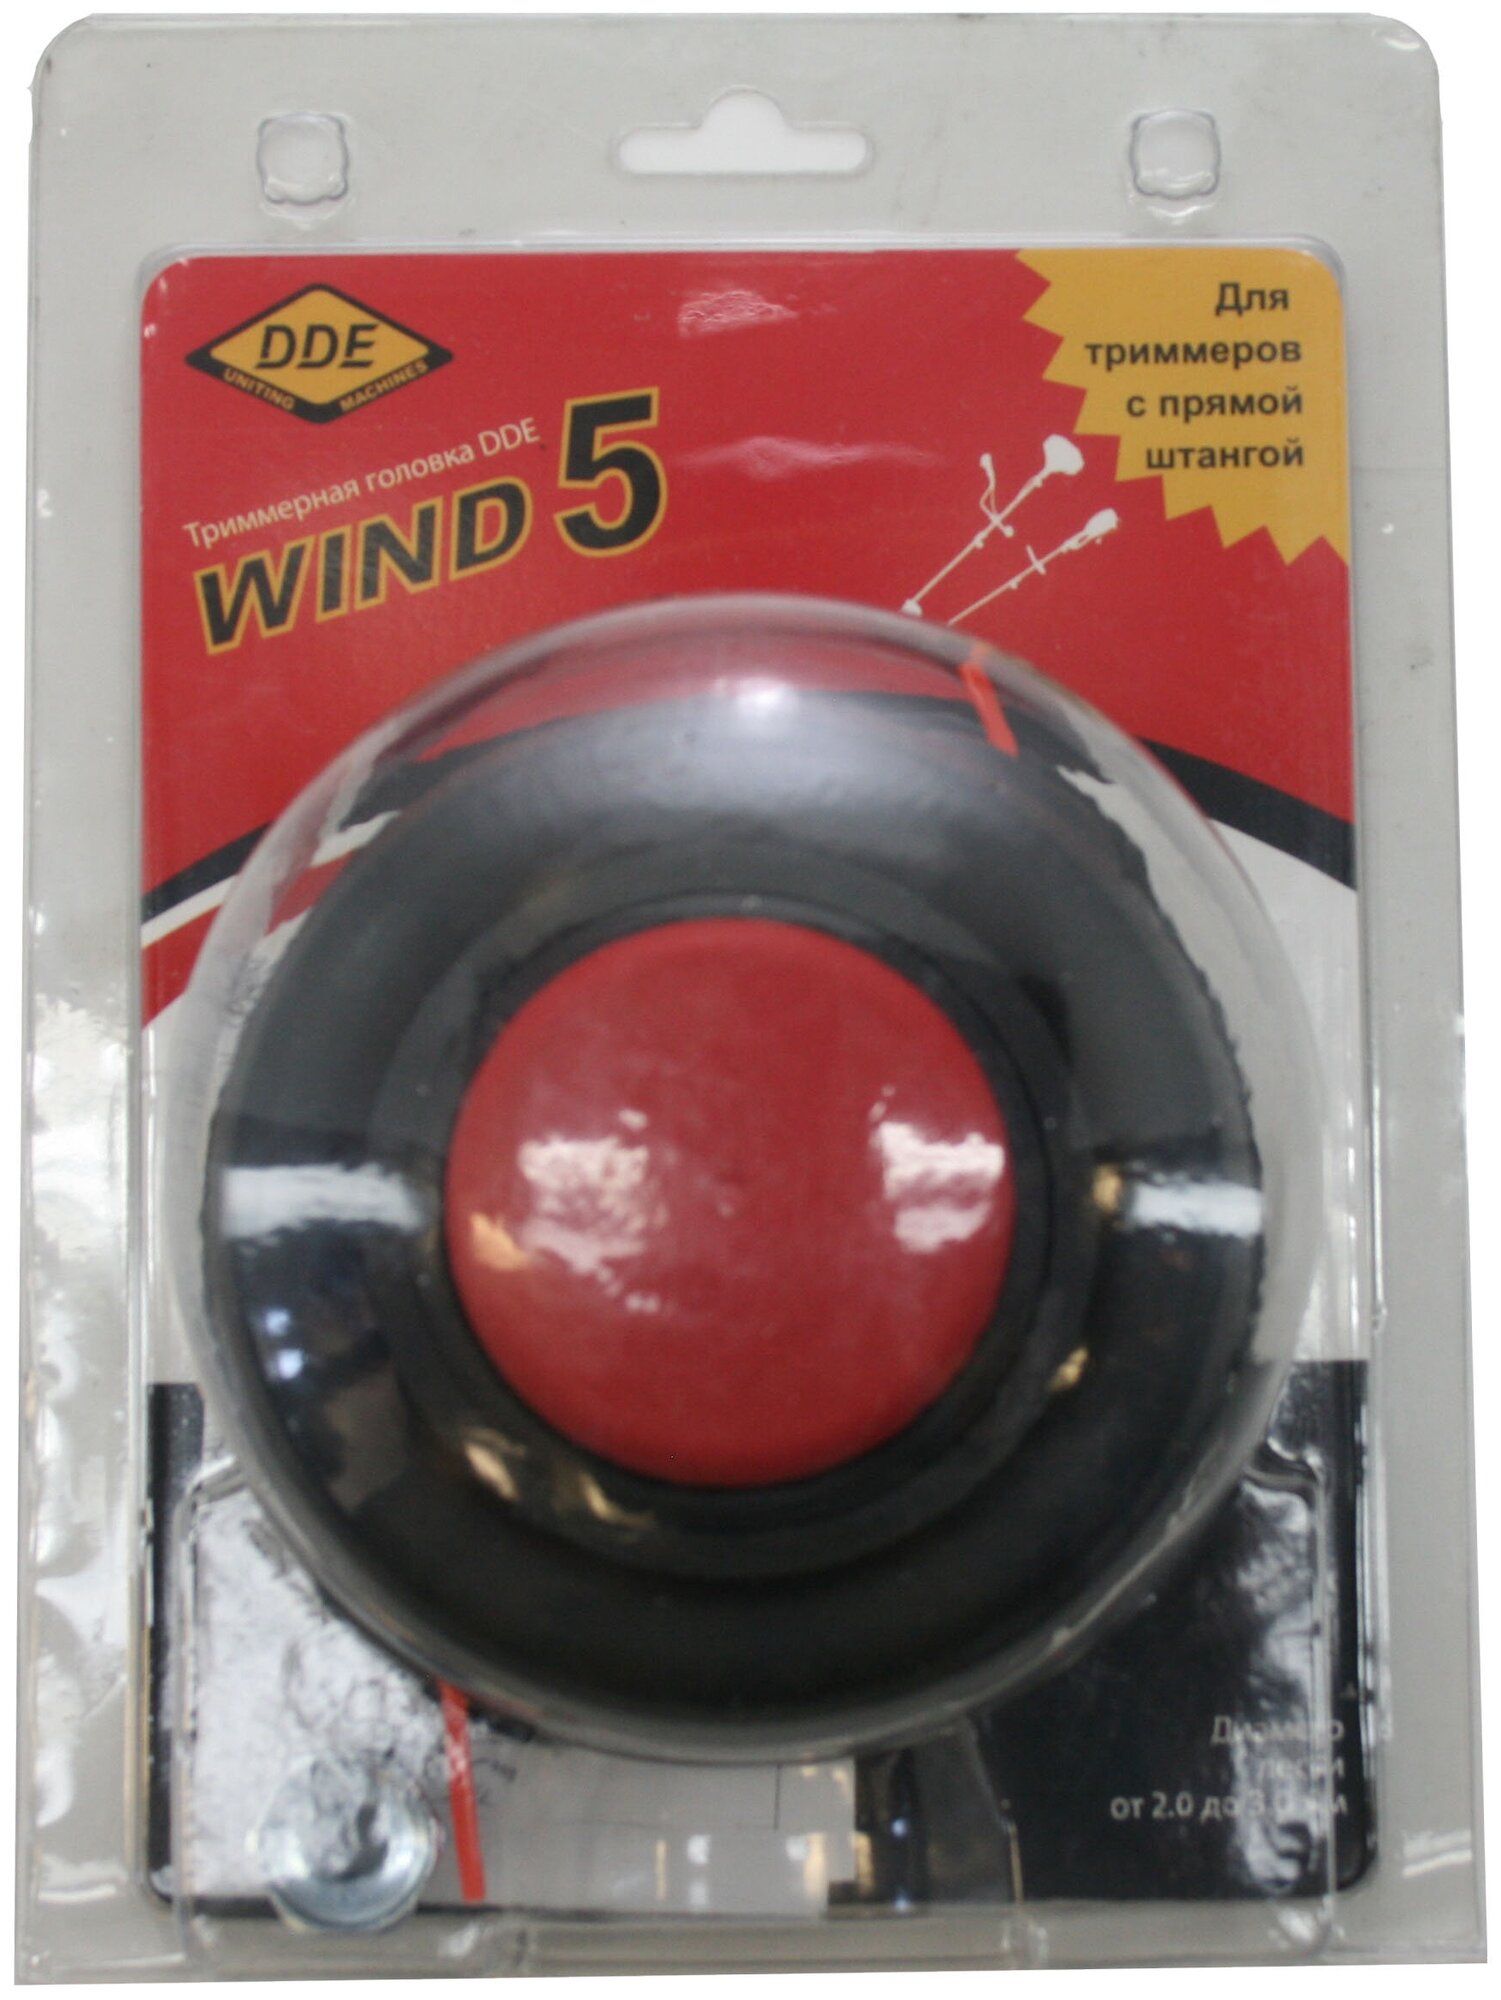 Головка триммерная серия WIND DDE Wind 5 - фотография № 8